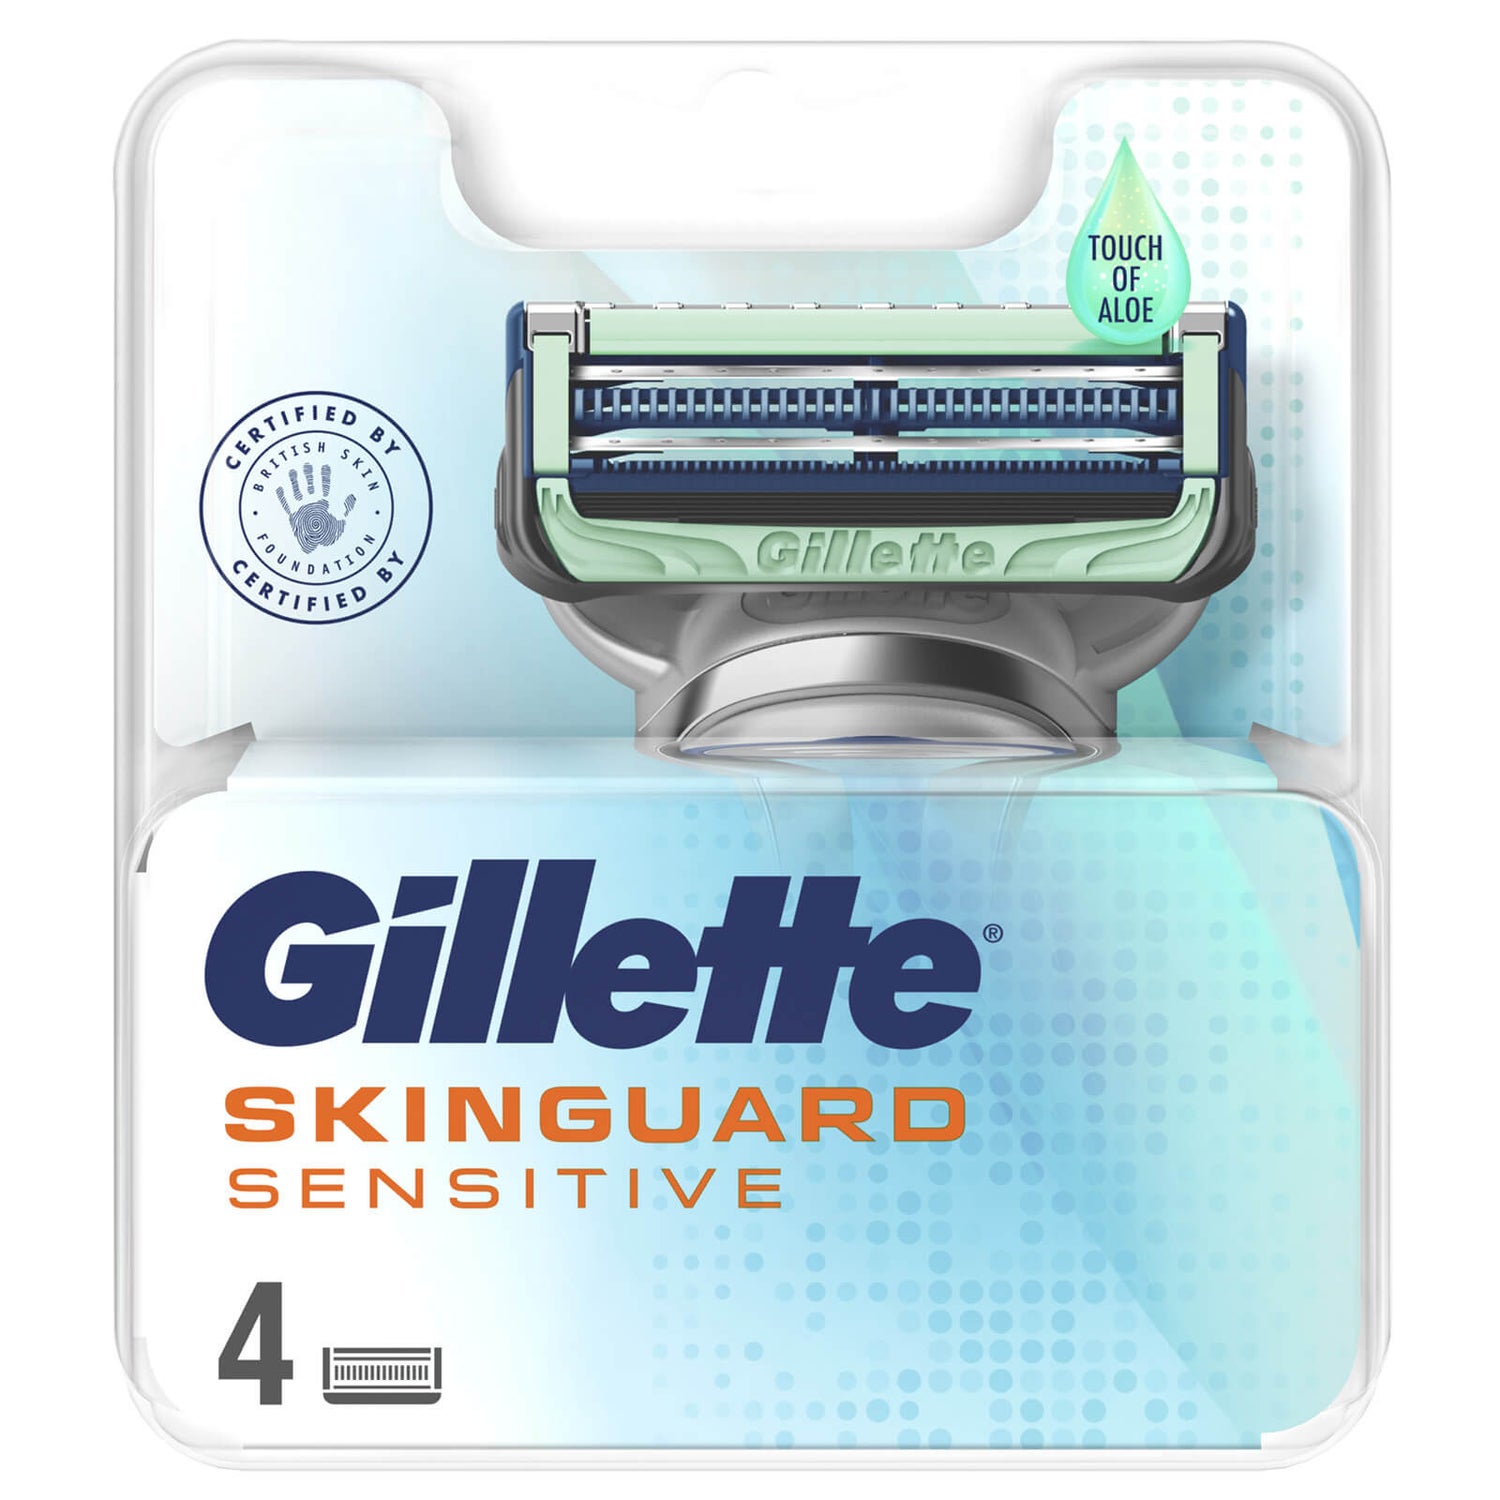 Gillette Skinguard Sensitive Razor Blades